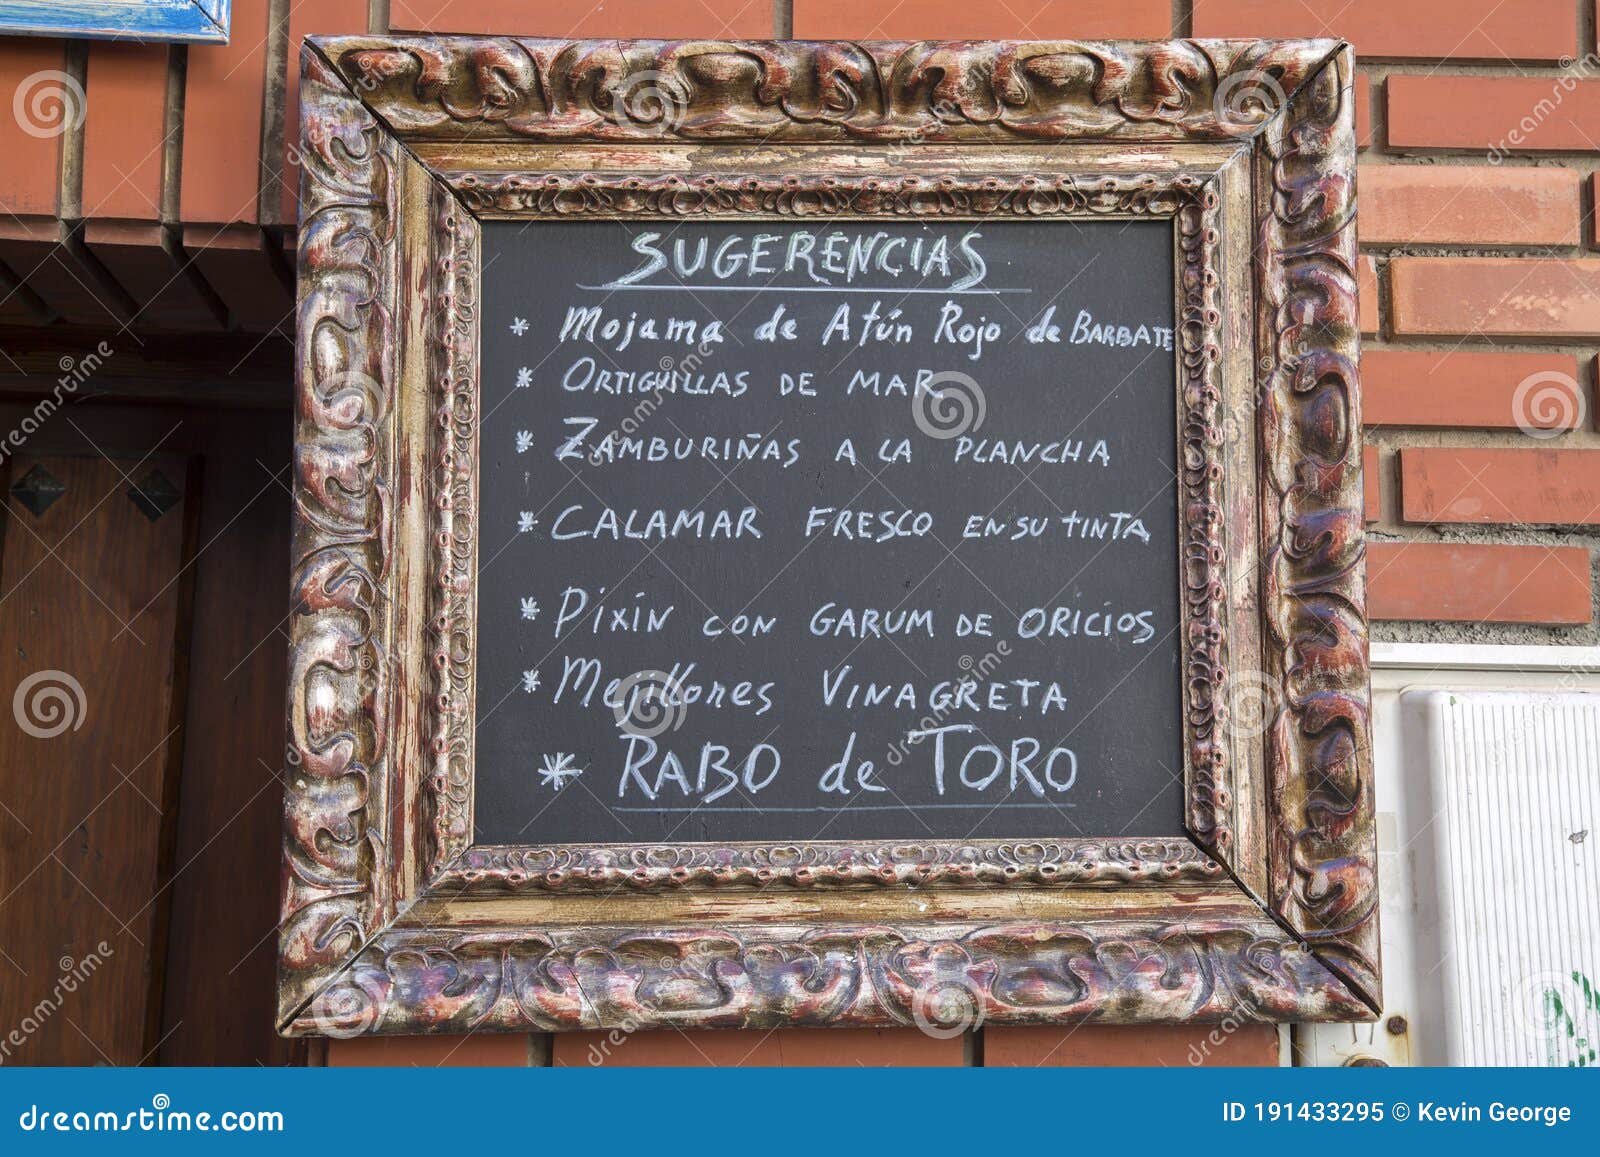 spanish restuarant menu sign